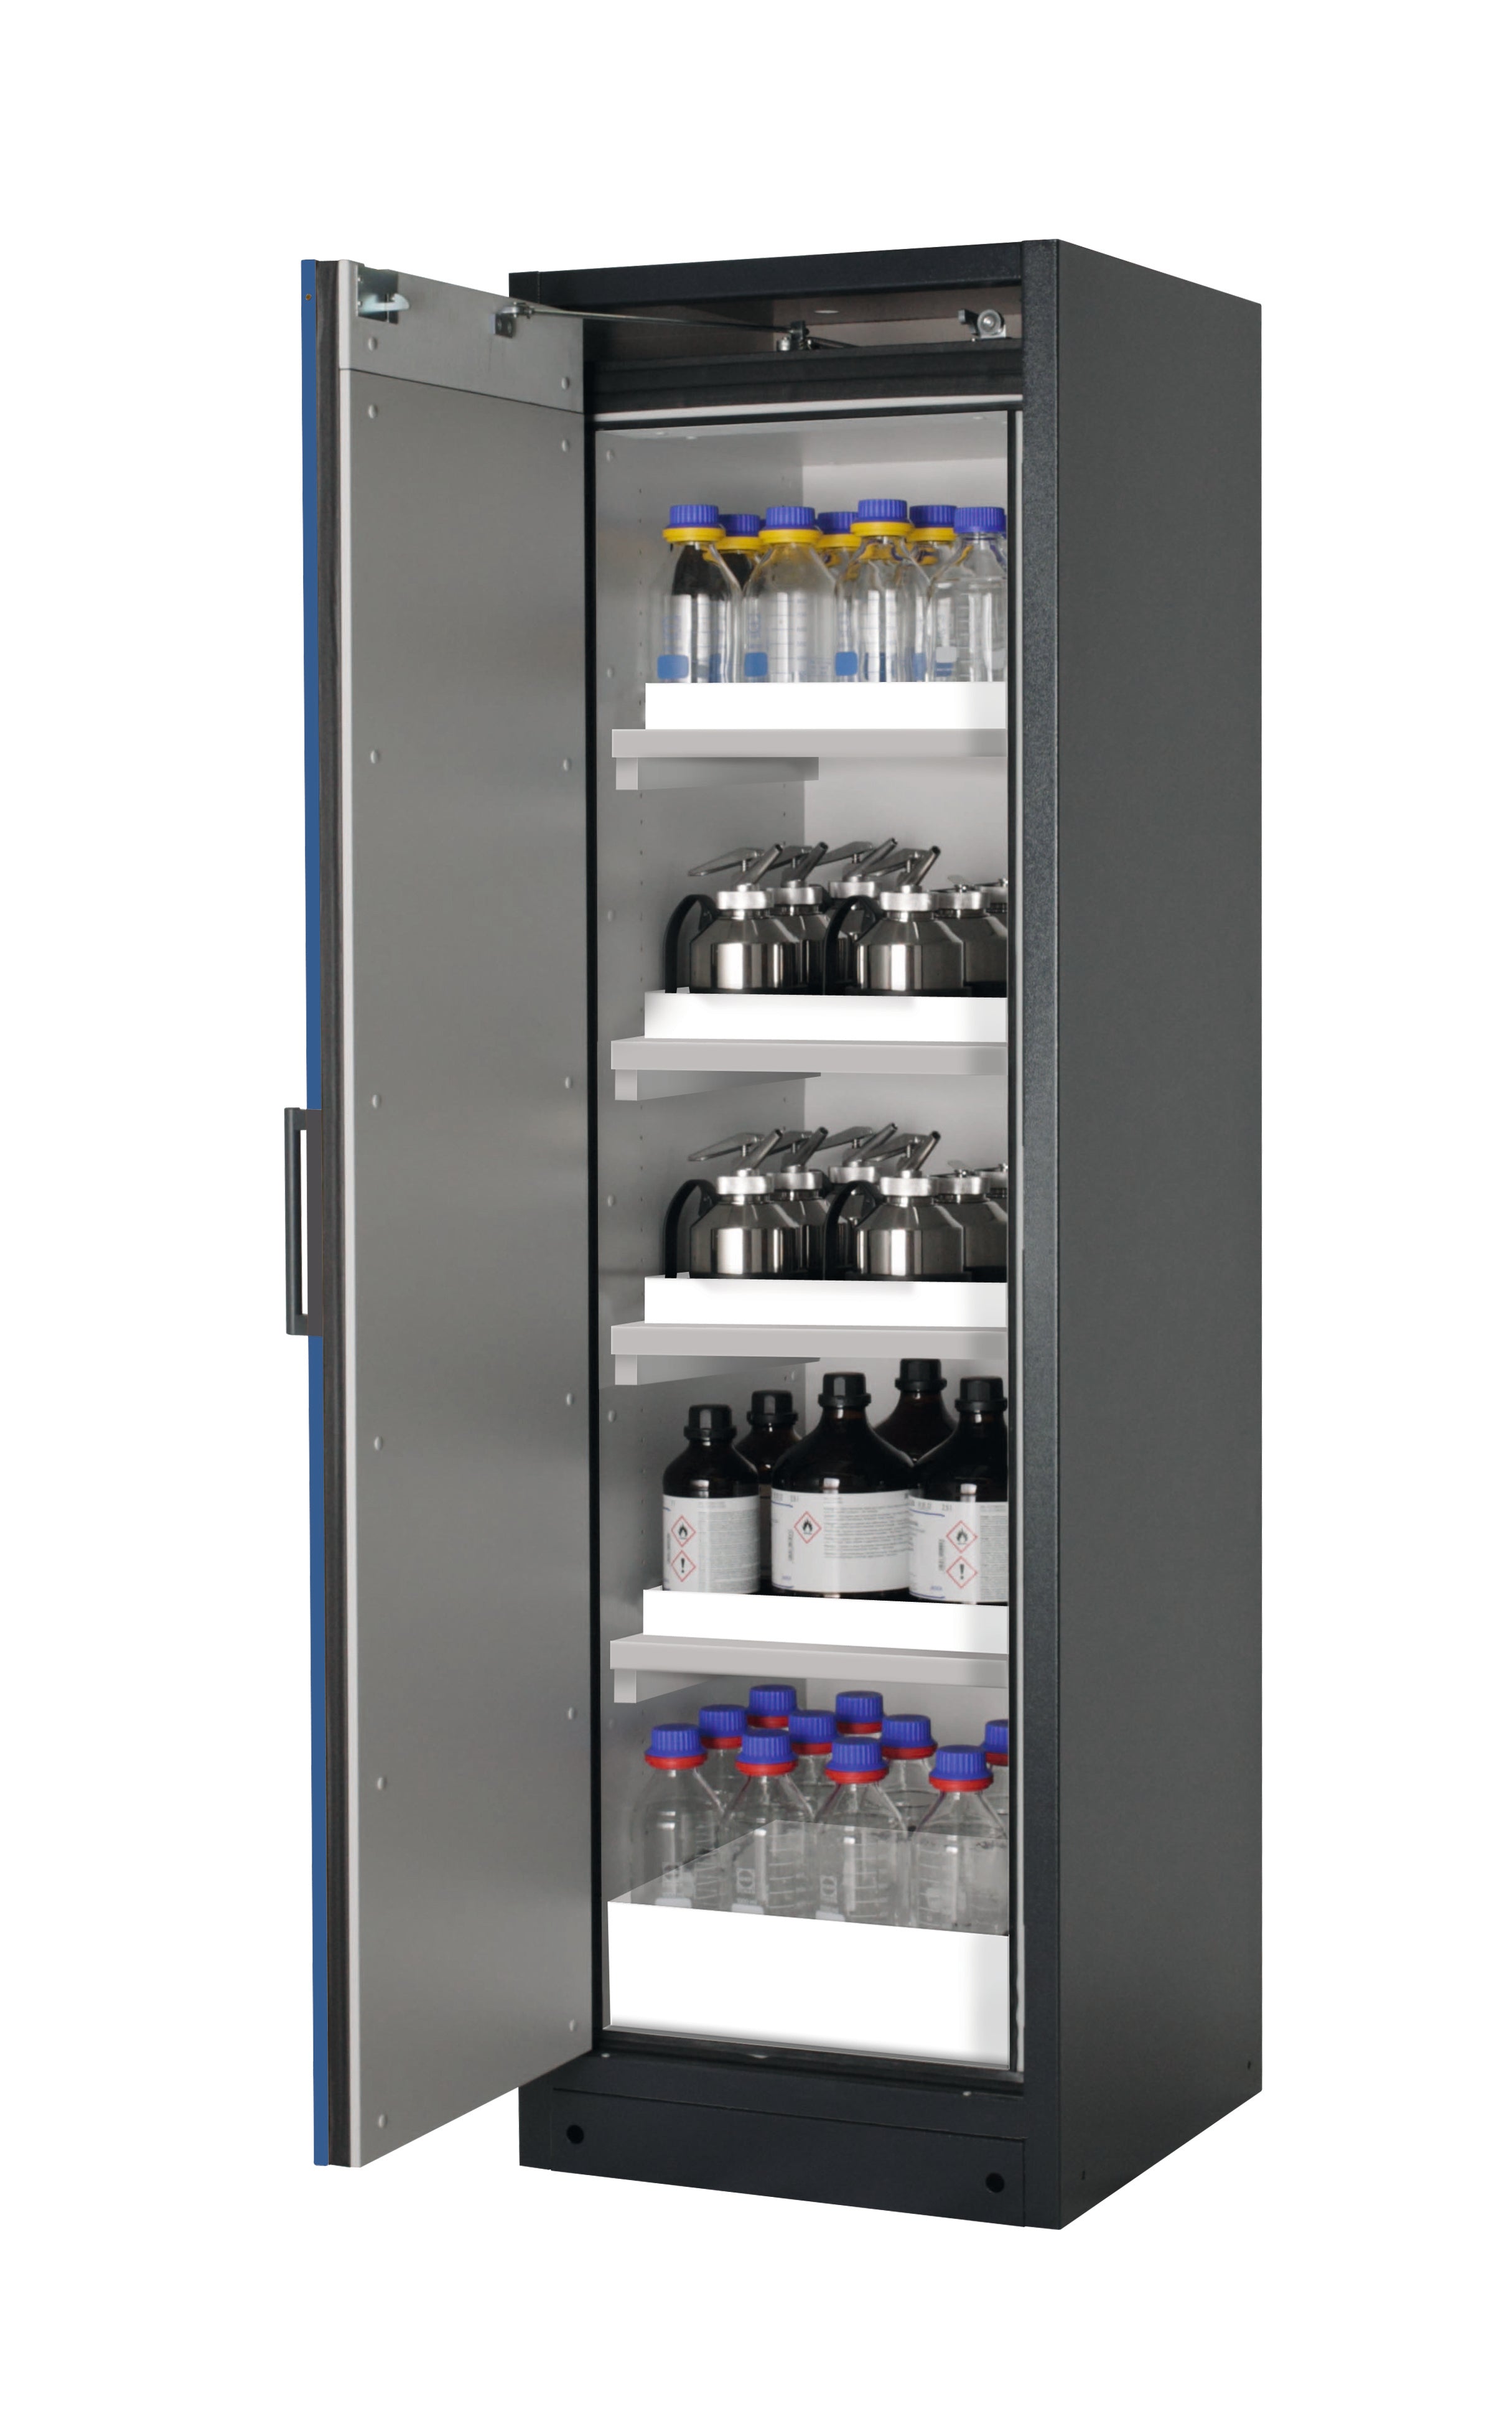 Type 90 safety storage cabinet Q-PEGASUS-90 model Q90.195.060.WDAC in gentian blue RAL 5010 with 4x tray shelf (standard) (polypropylene),